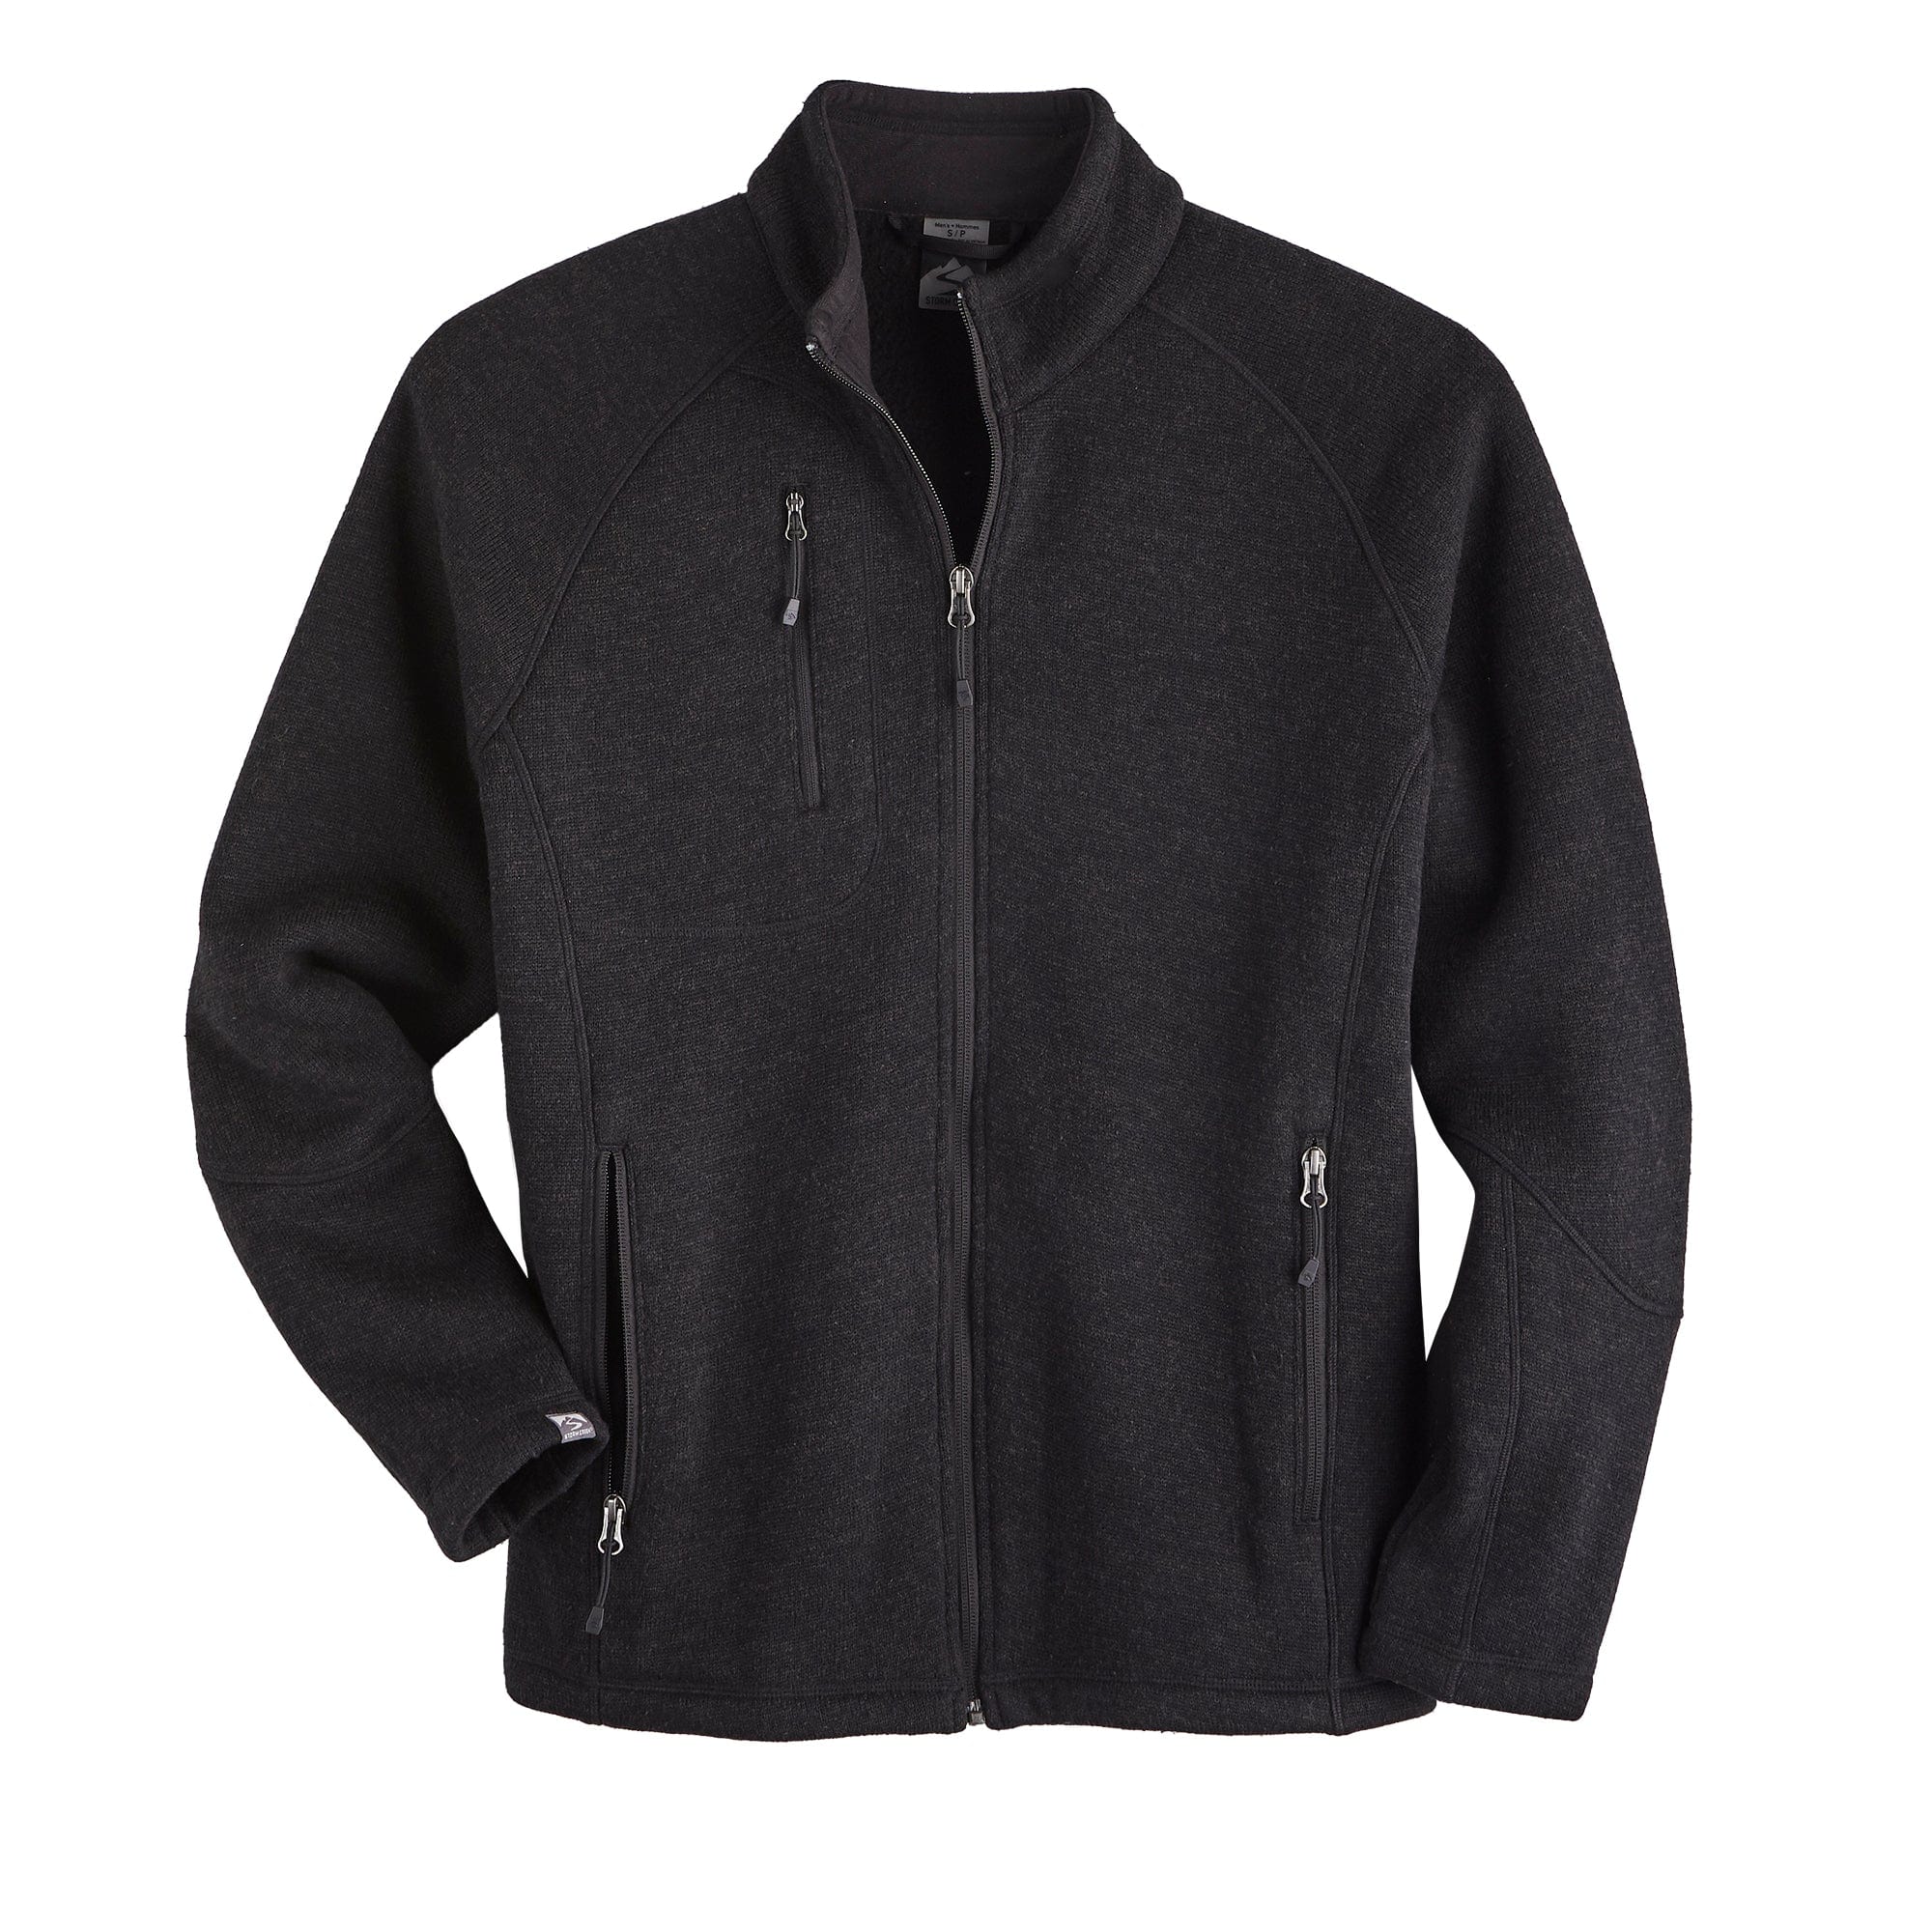 Customizable Storm Creek® Men's Overachiever Sweaterfleece Jacket in black.